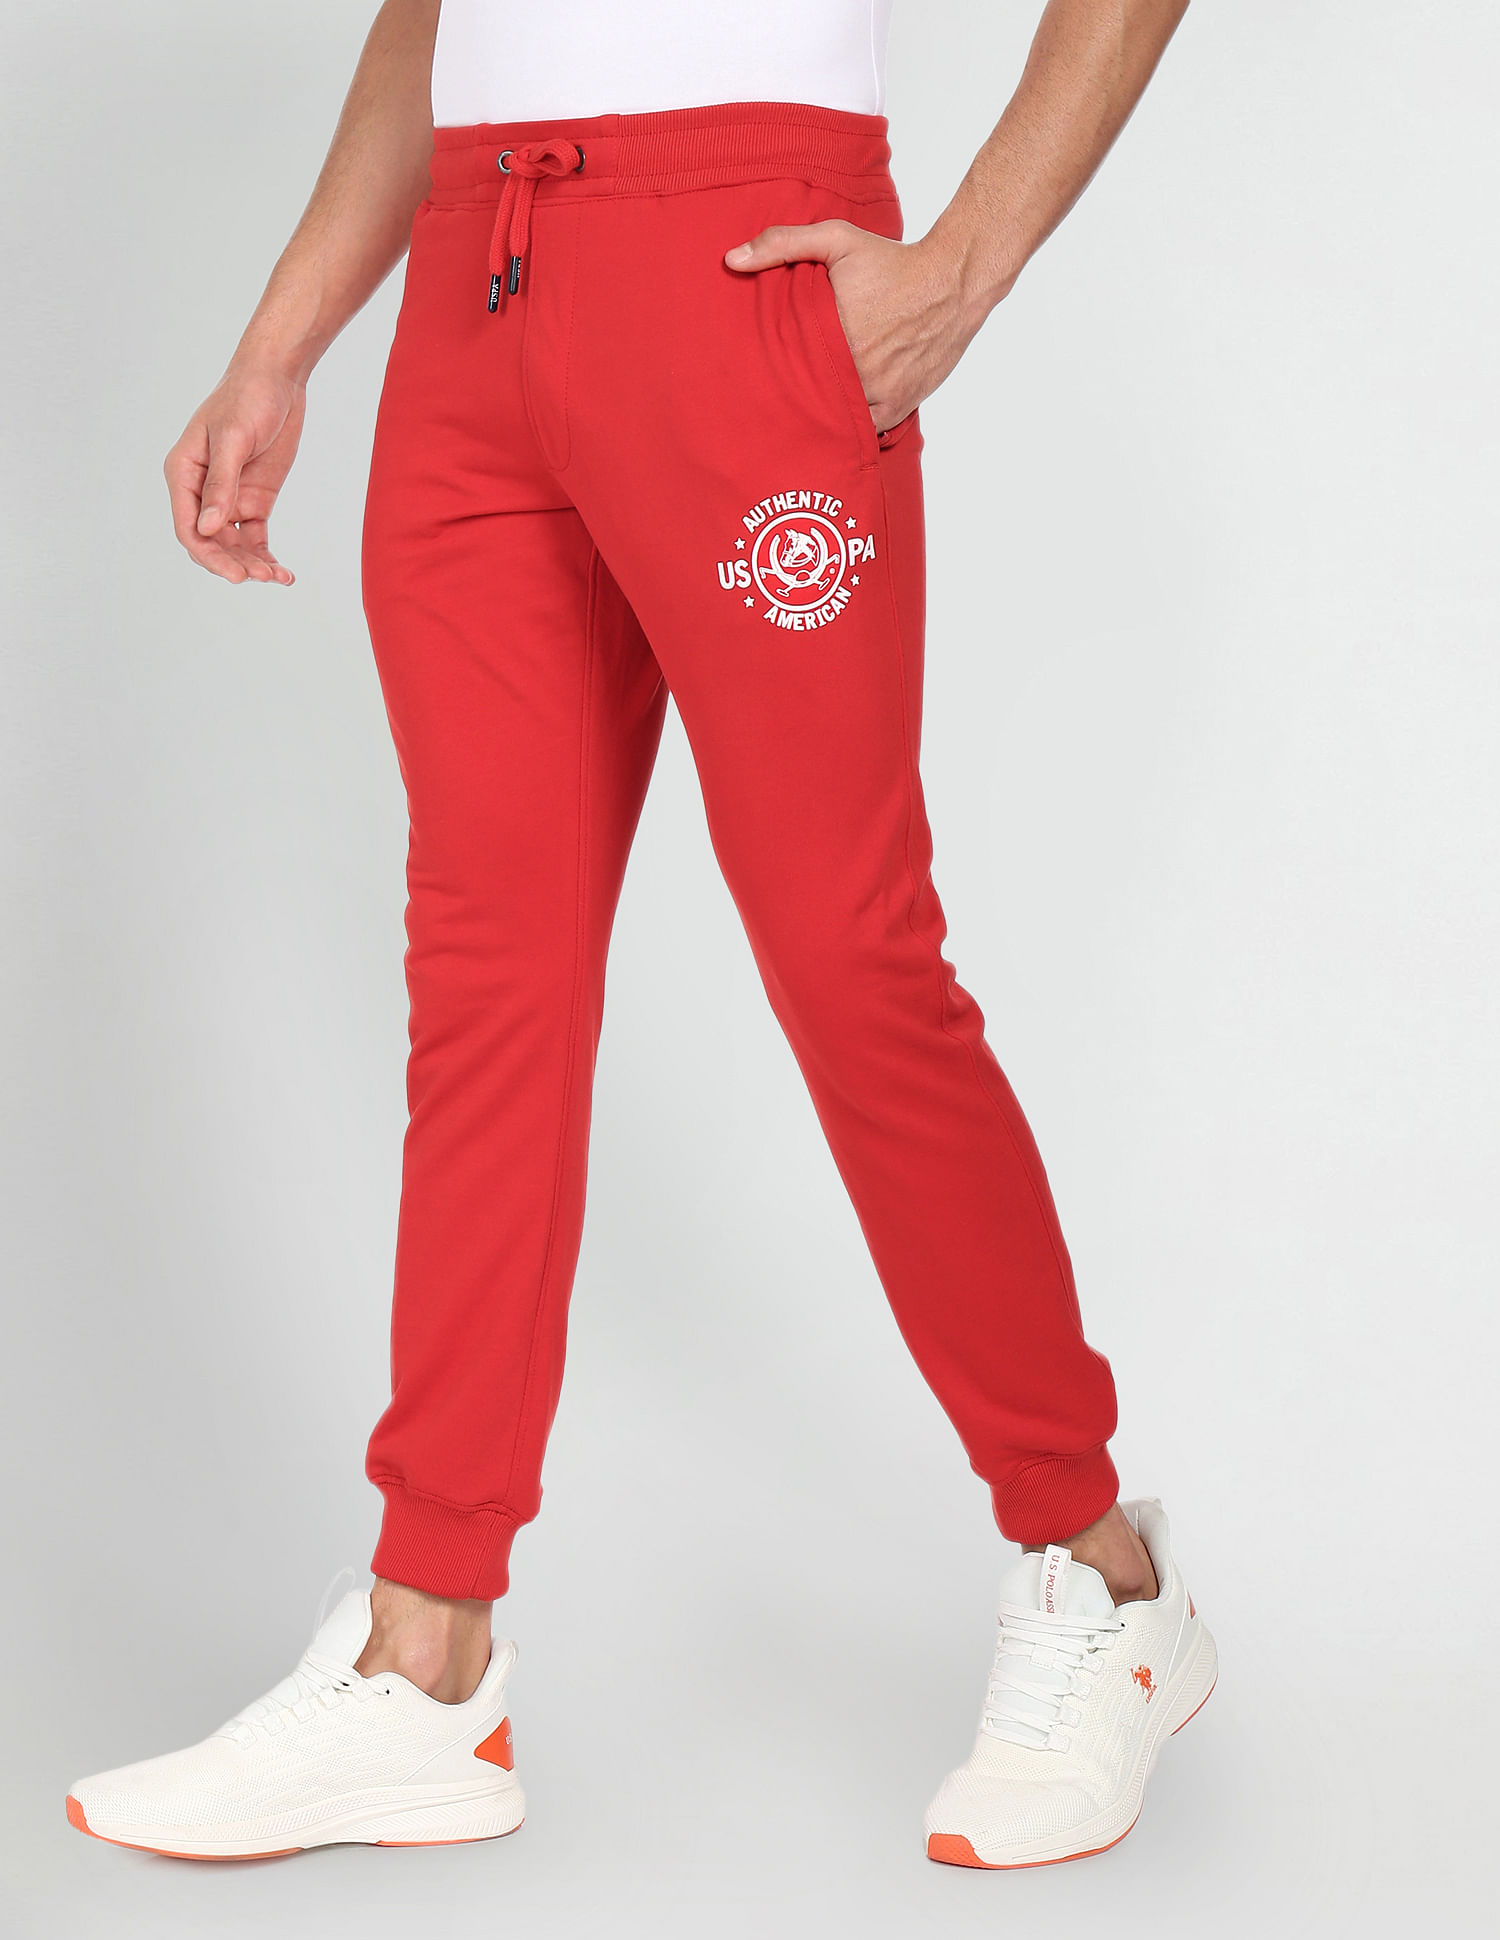 Puma Mens Iconic T7 Track Pants PT High Risk Red L  Amazonin Fashion